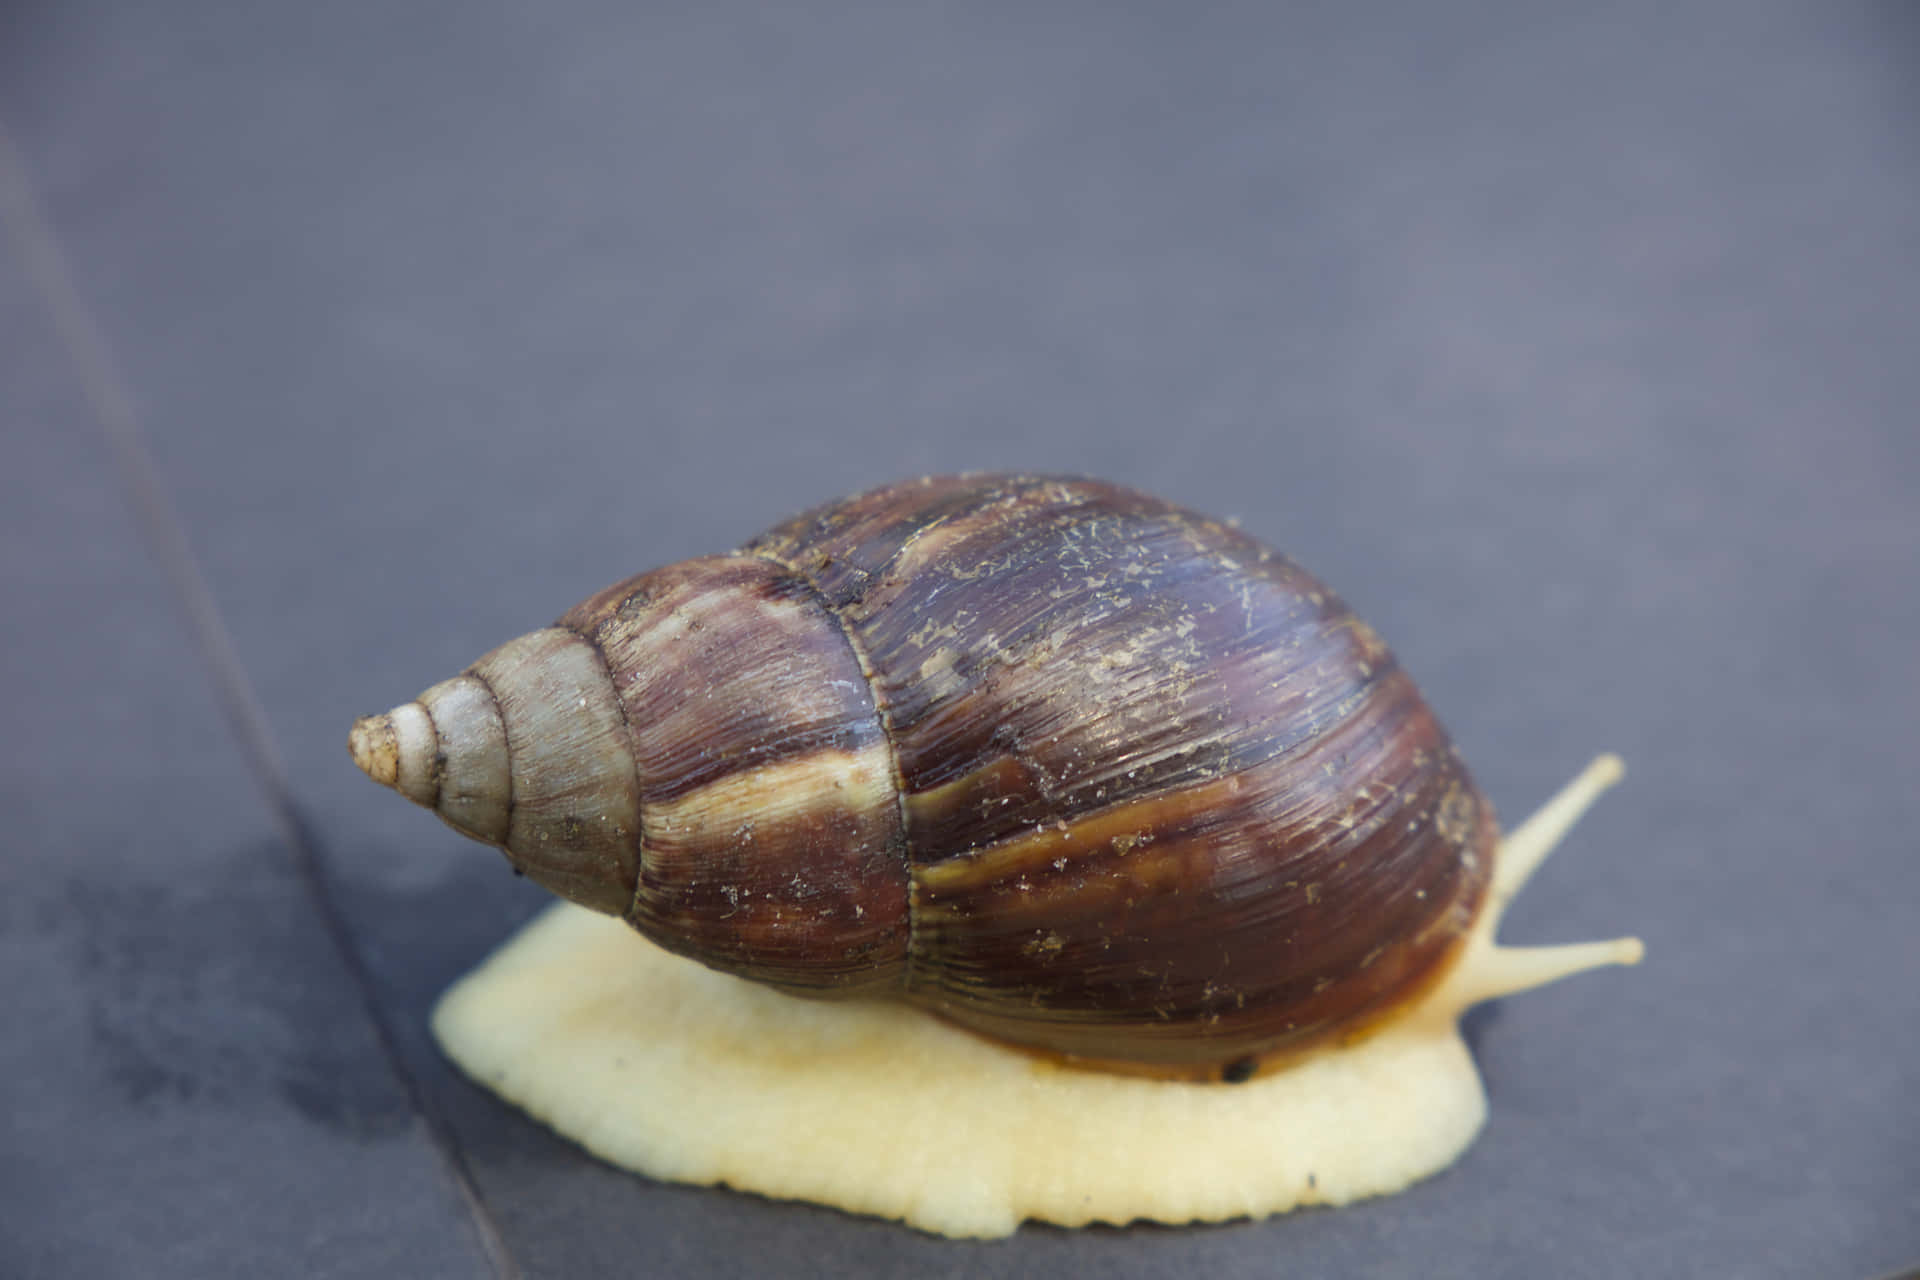 A Close Up of a Snail